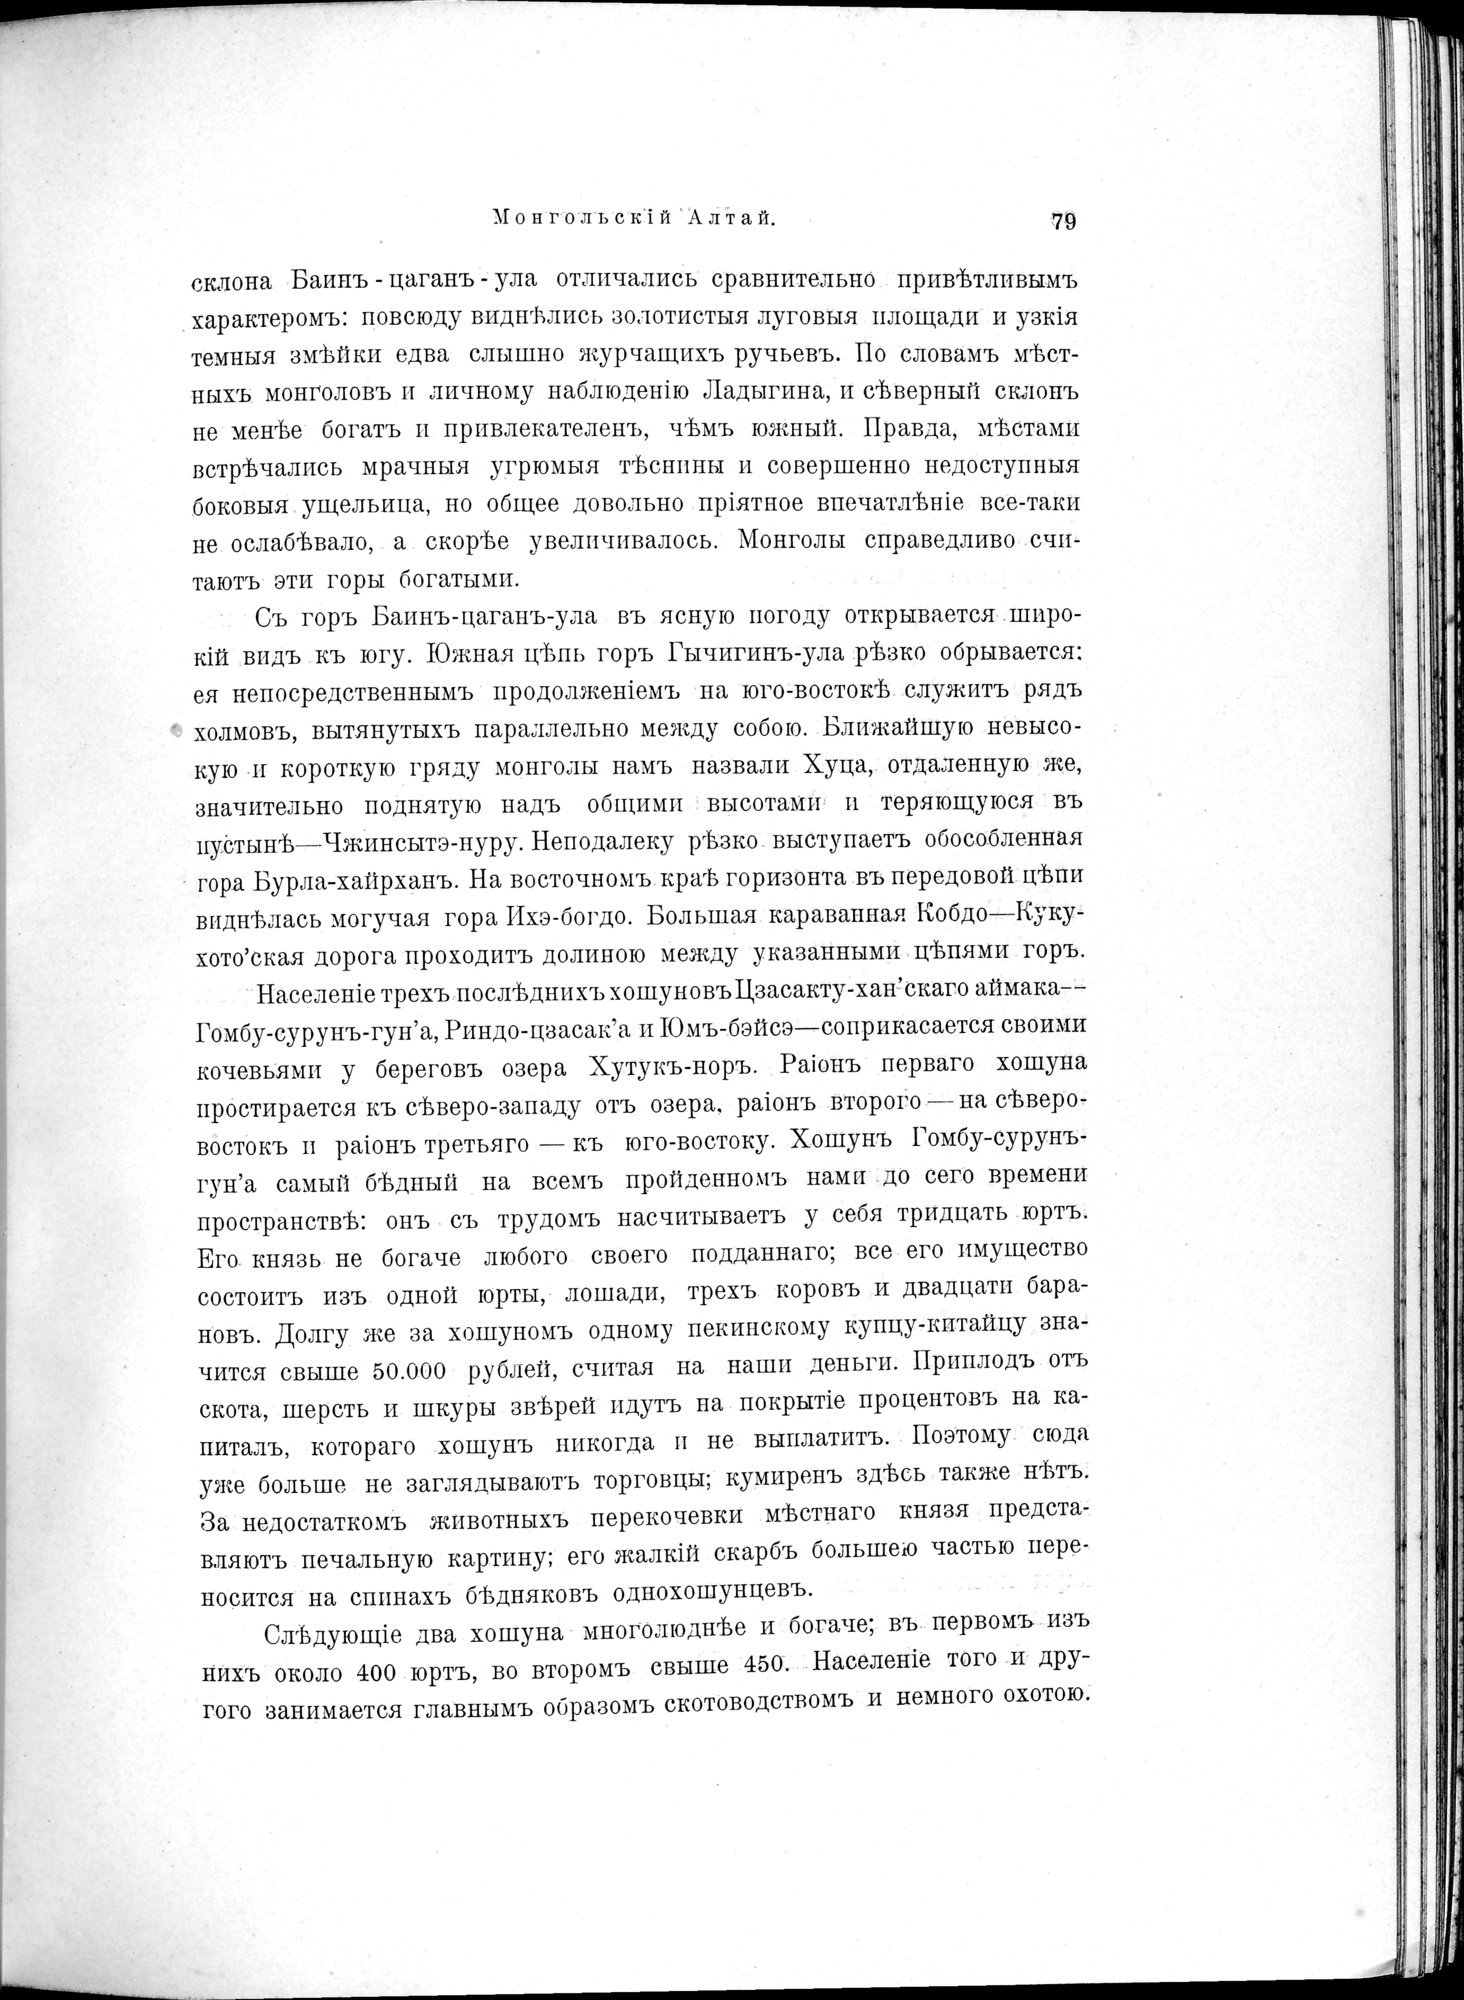 Mongoliia i Kam : vol.1 / Page 113 (Grayscale High Resolution Image)